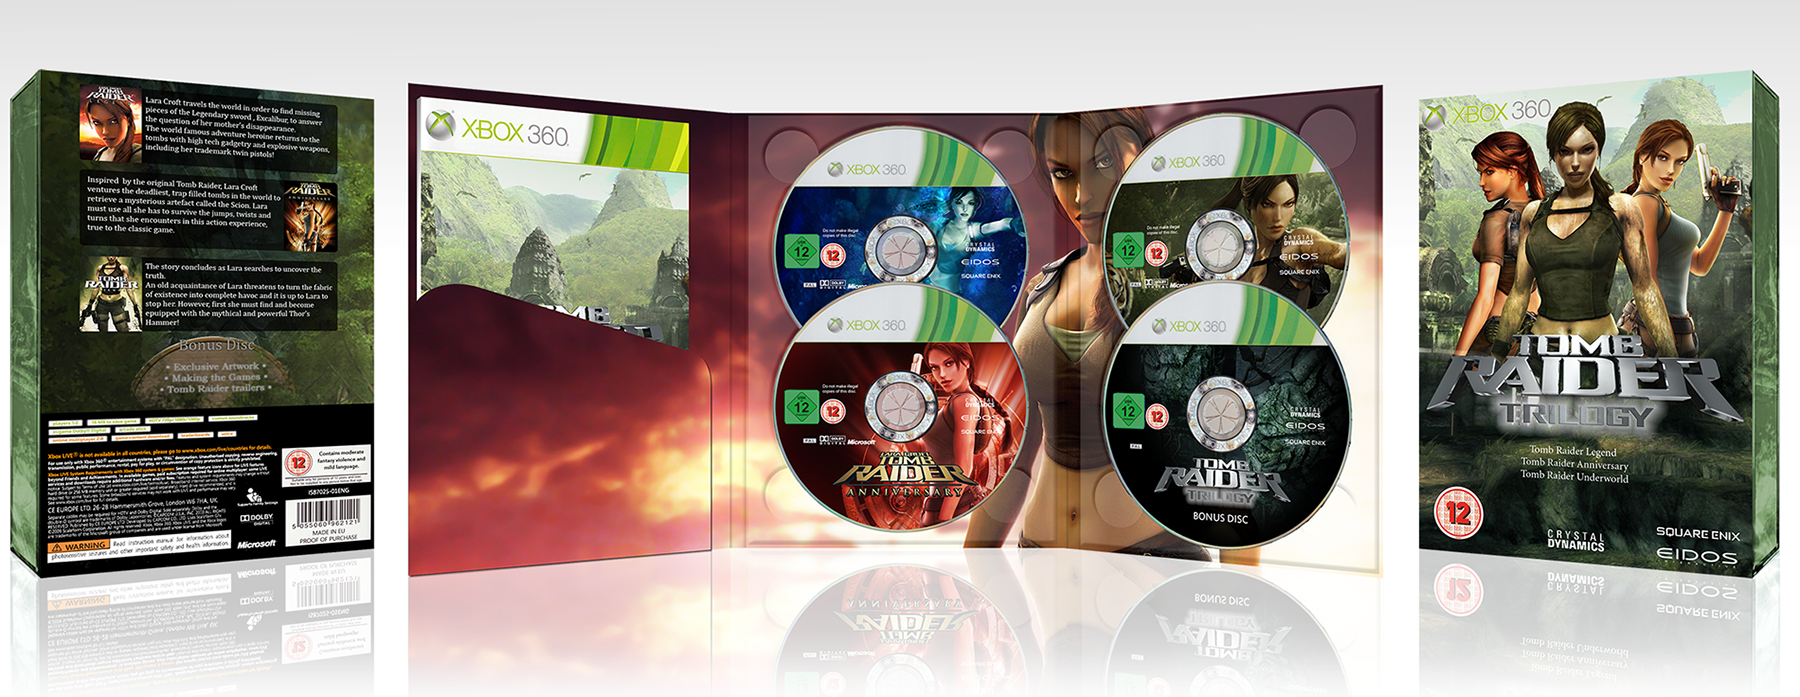 Tomb Raider Trilogy box cover